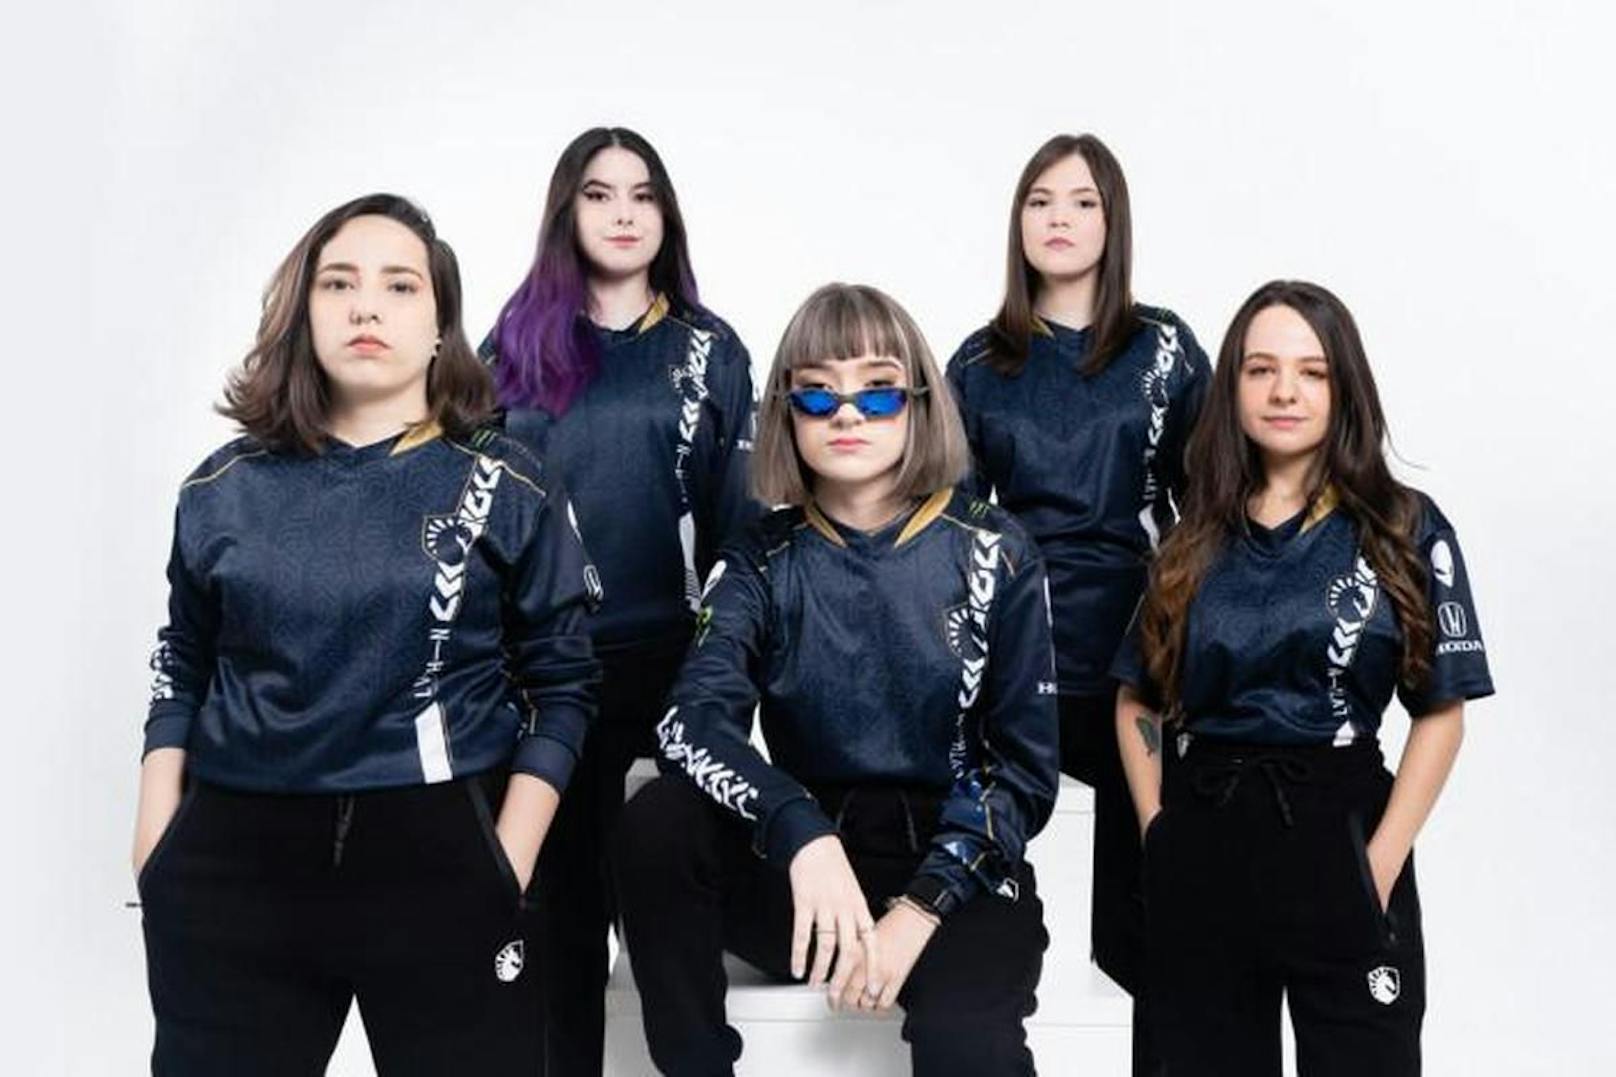 Dieses neue Frauen-Team dominiert die Gaming-Szene